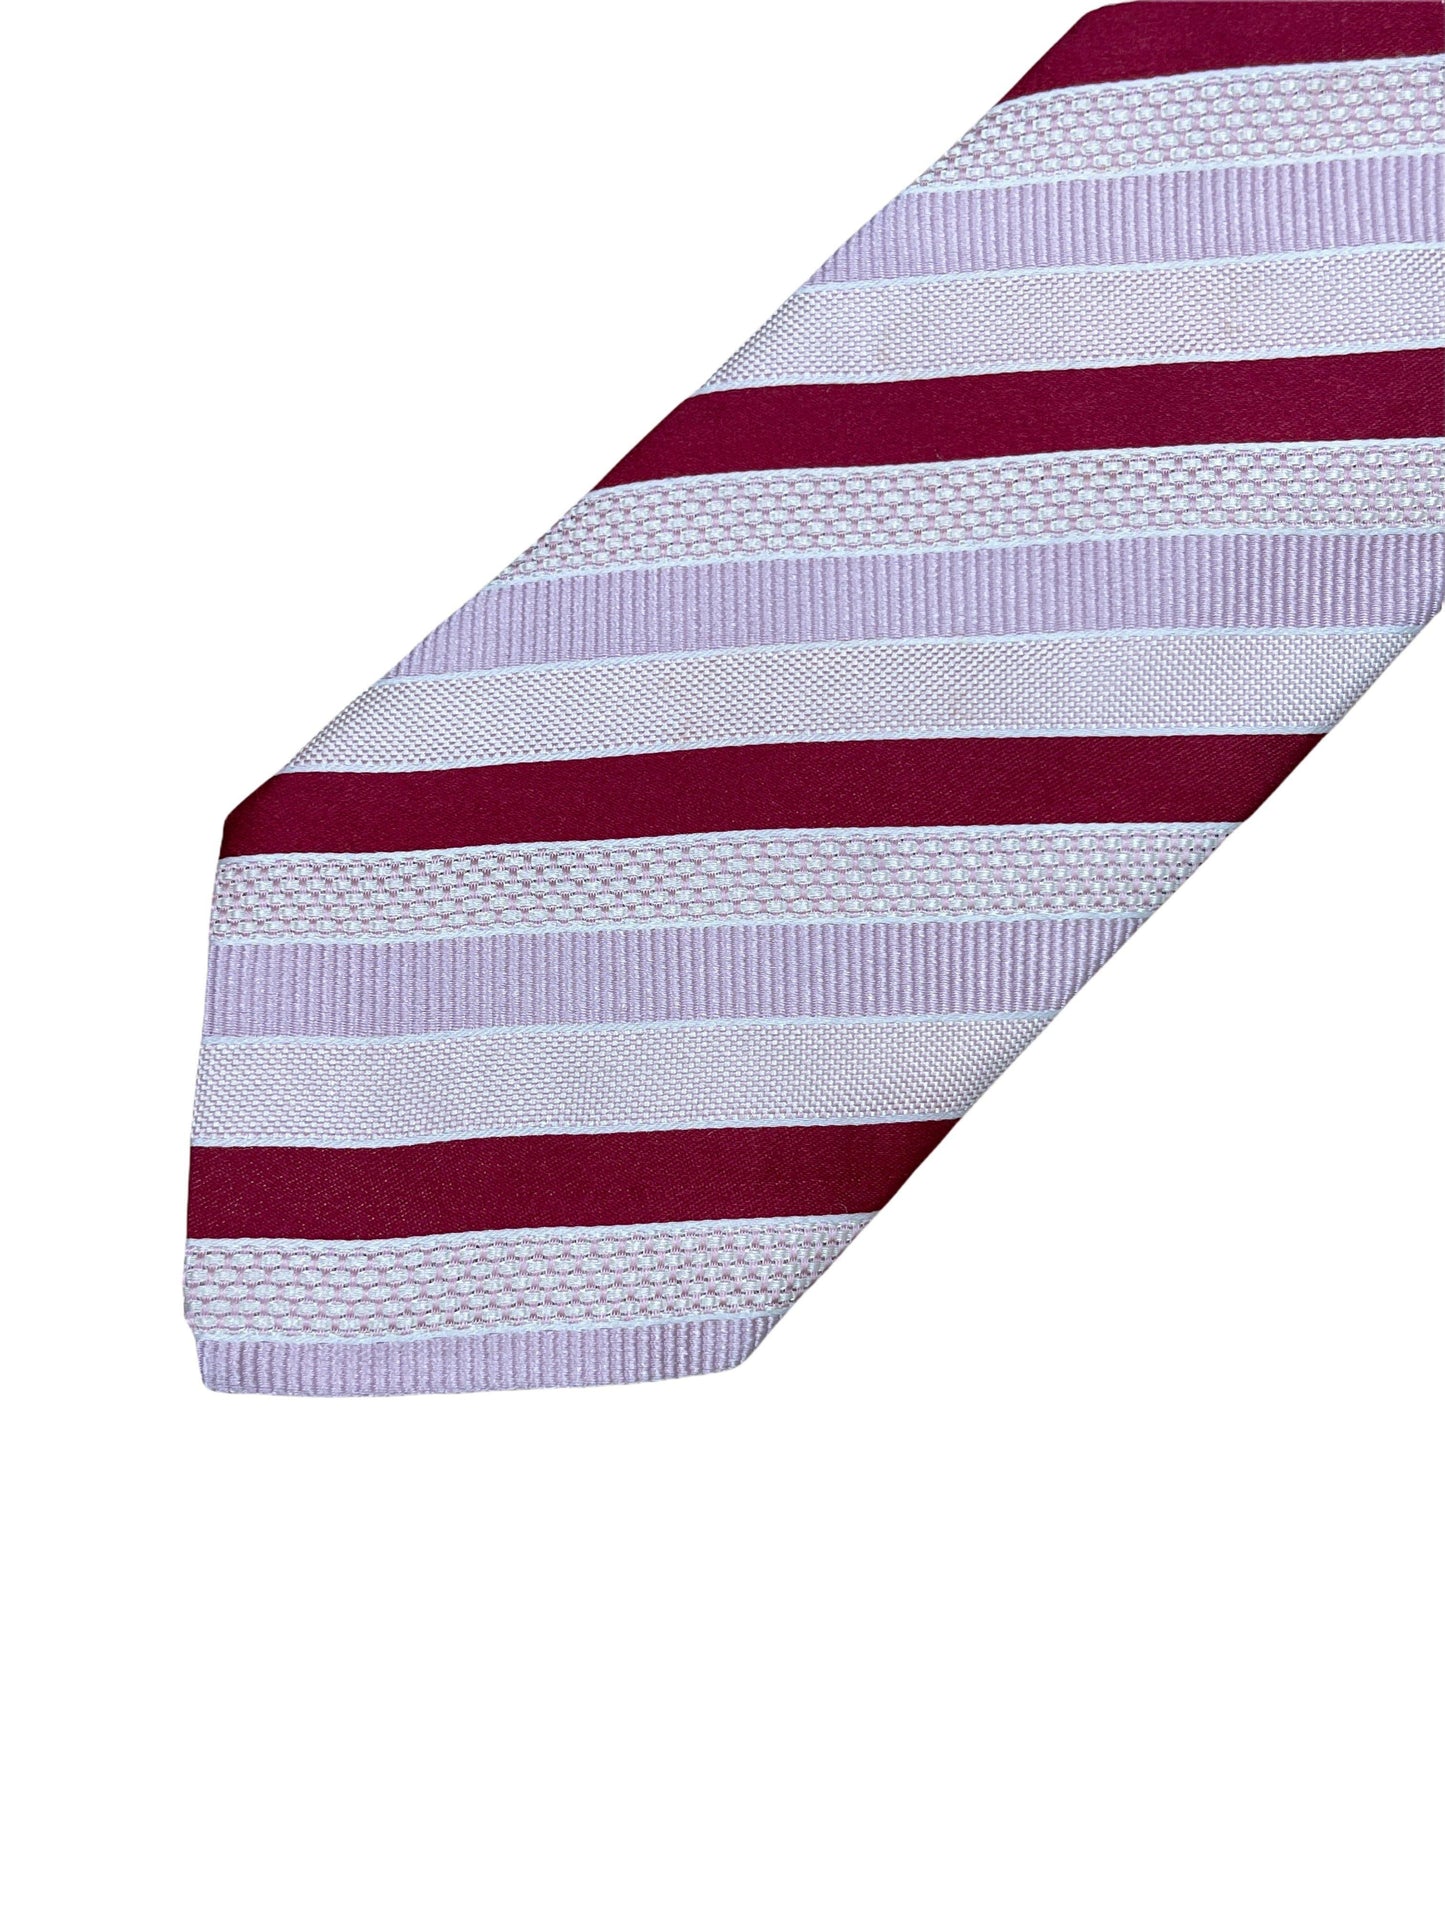 Hugo Boss striped silk tie 